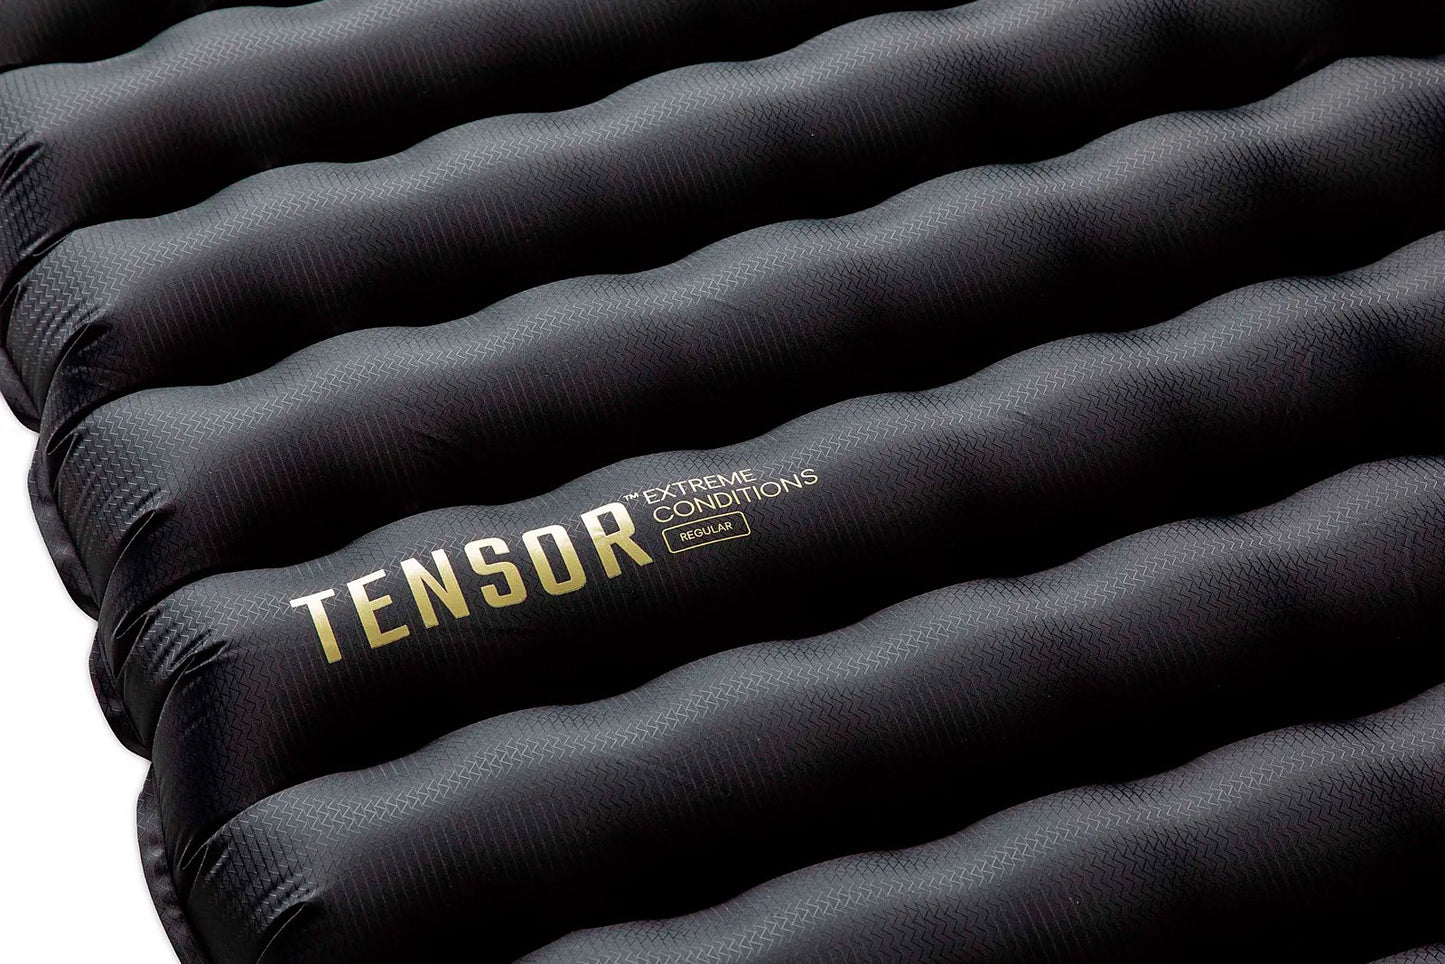 NEMO - Tensor Extreme Conditions Ultralight Insulated Sleeping Pad - Regular